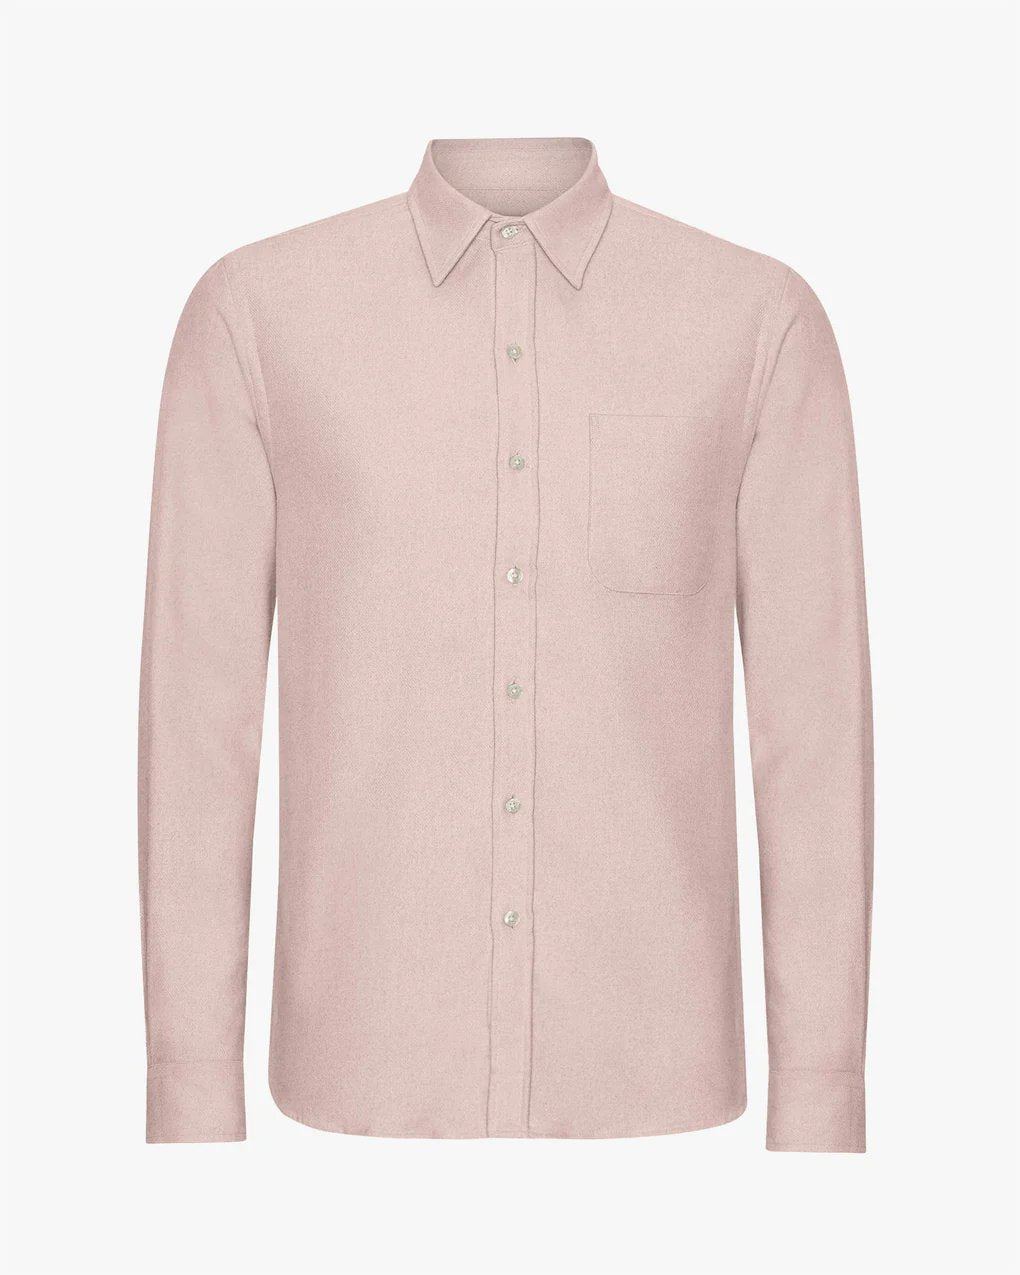 Organic Flannel Shirt - Colorful Standard - Danali - CS4006-FadedPink-M